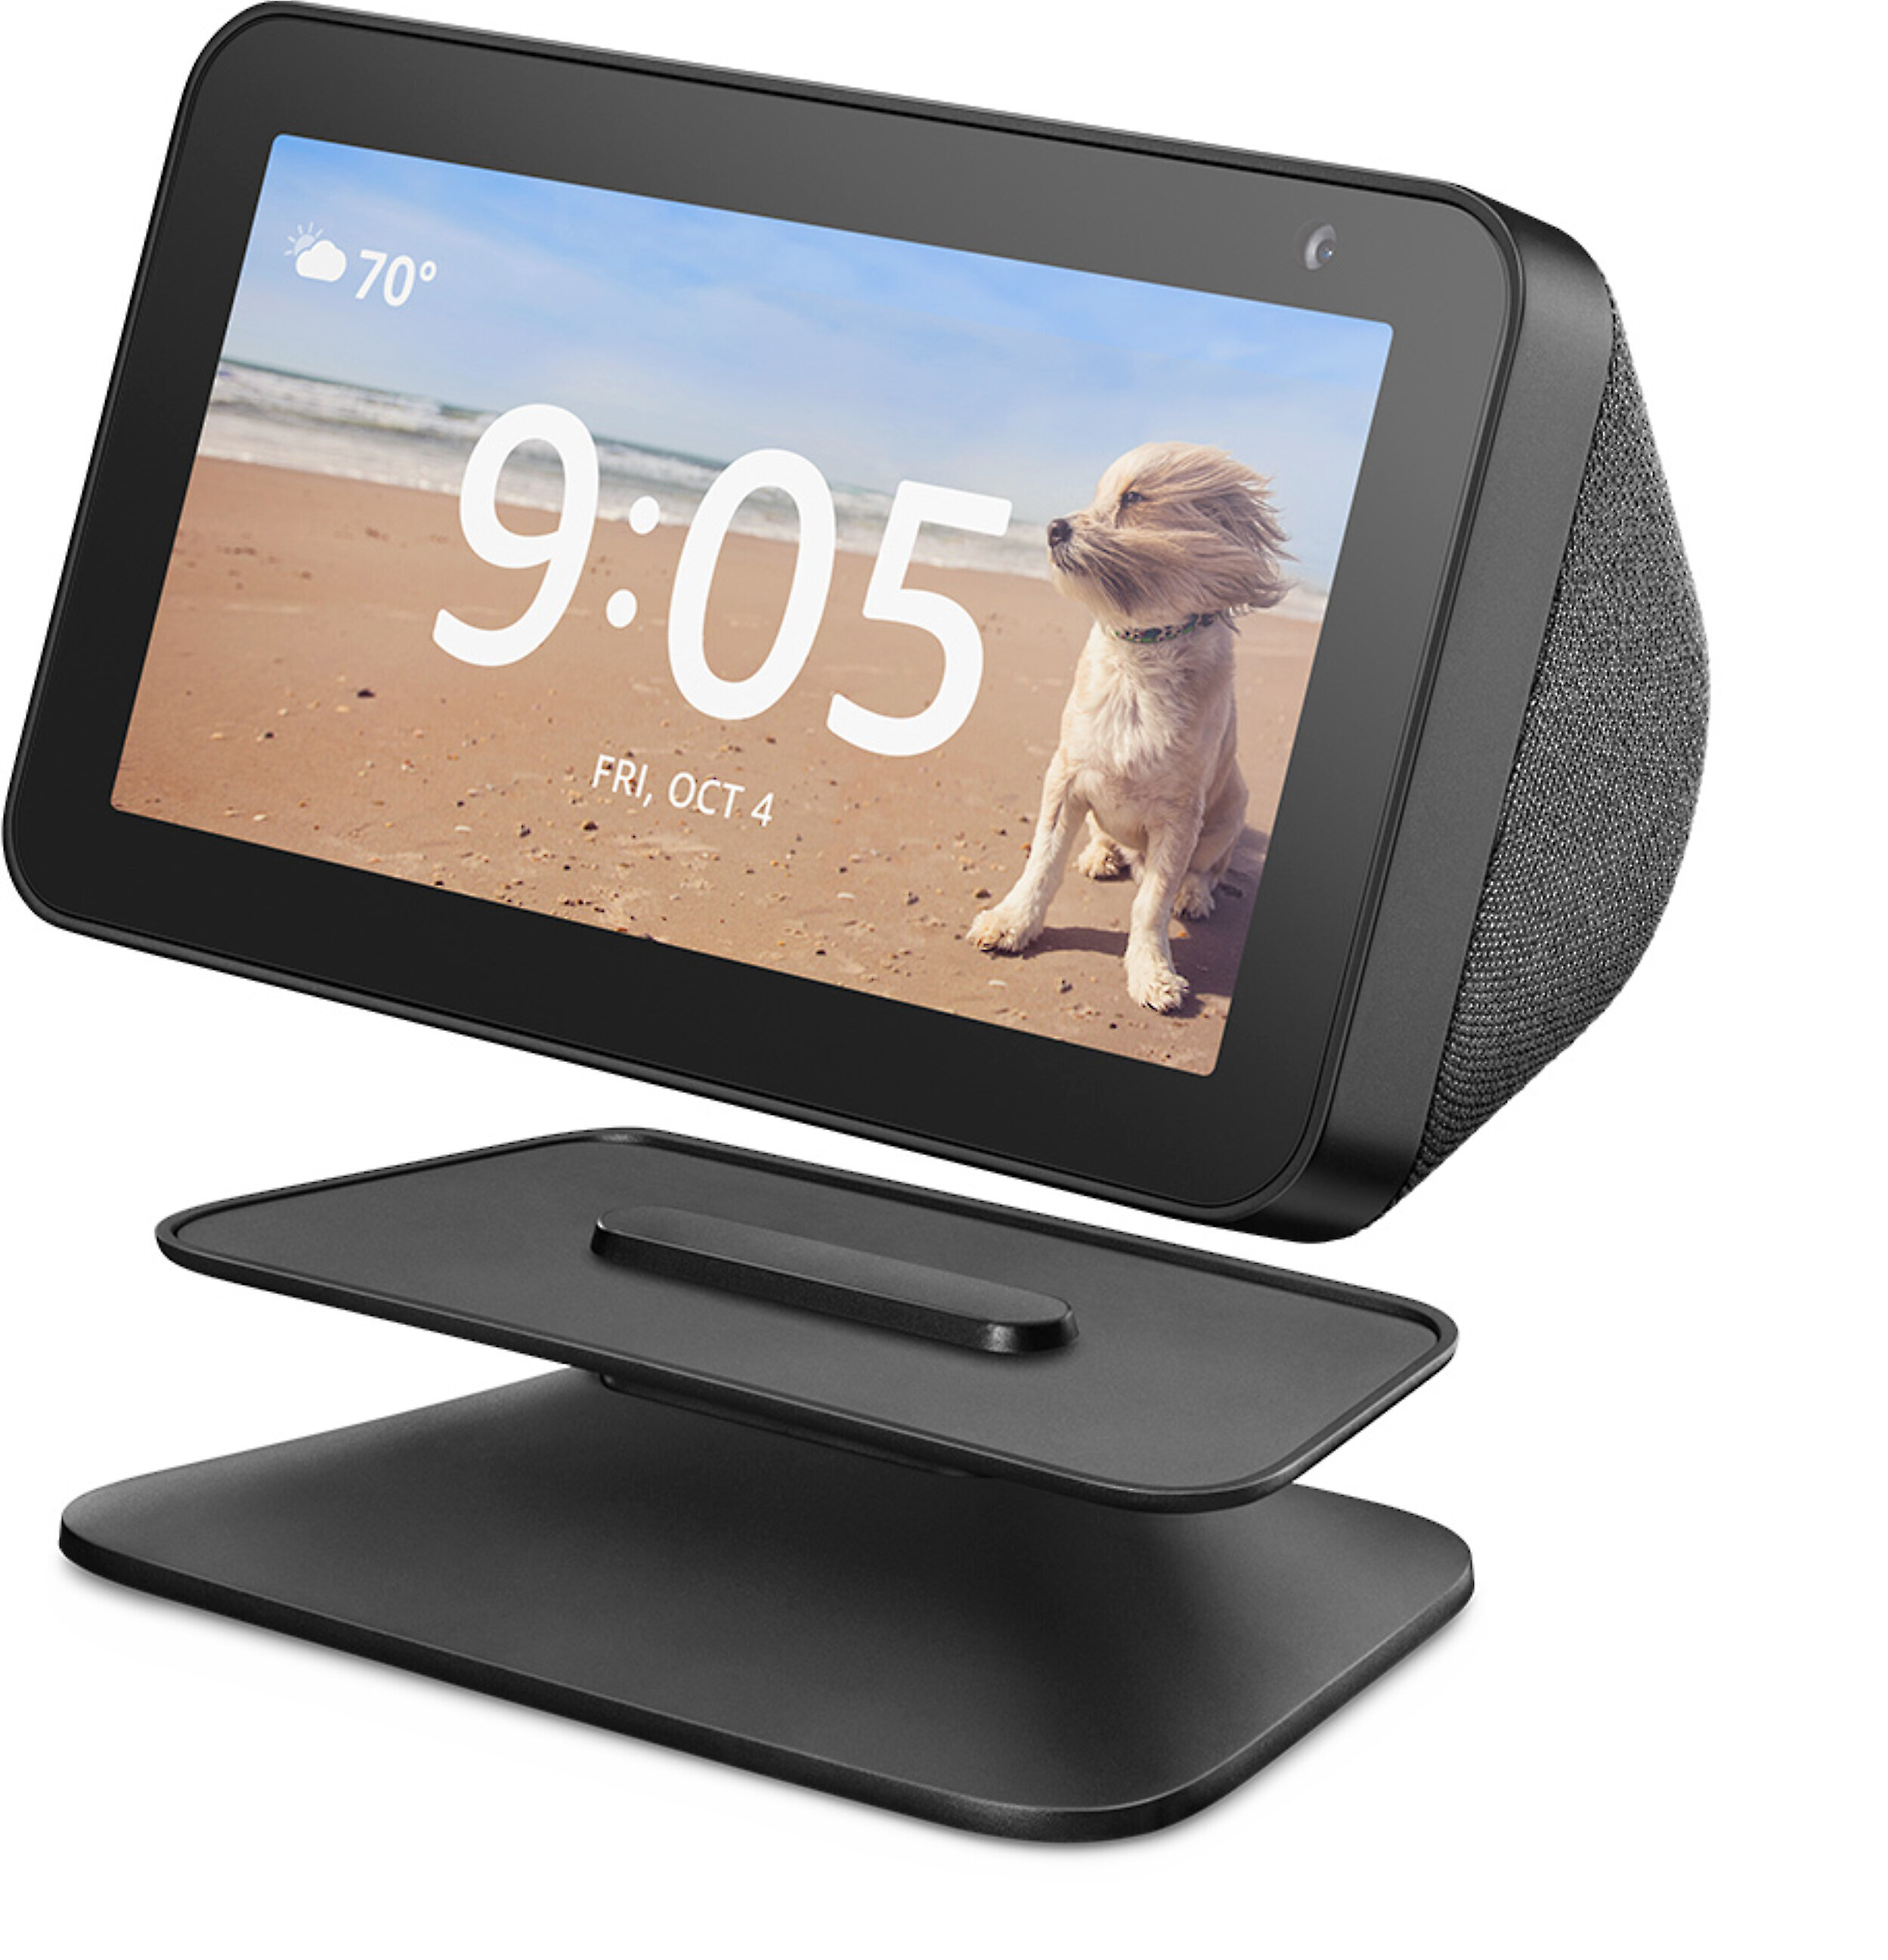 Amazon Echo Show 5 Review - Your next essential smart home purhcase?